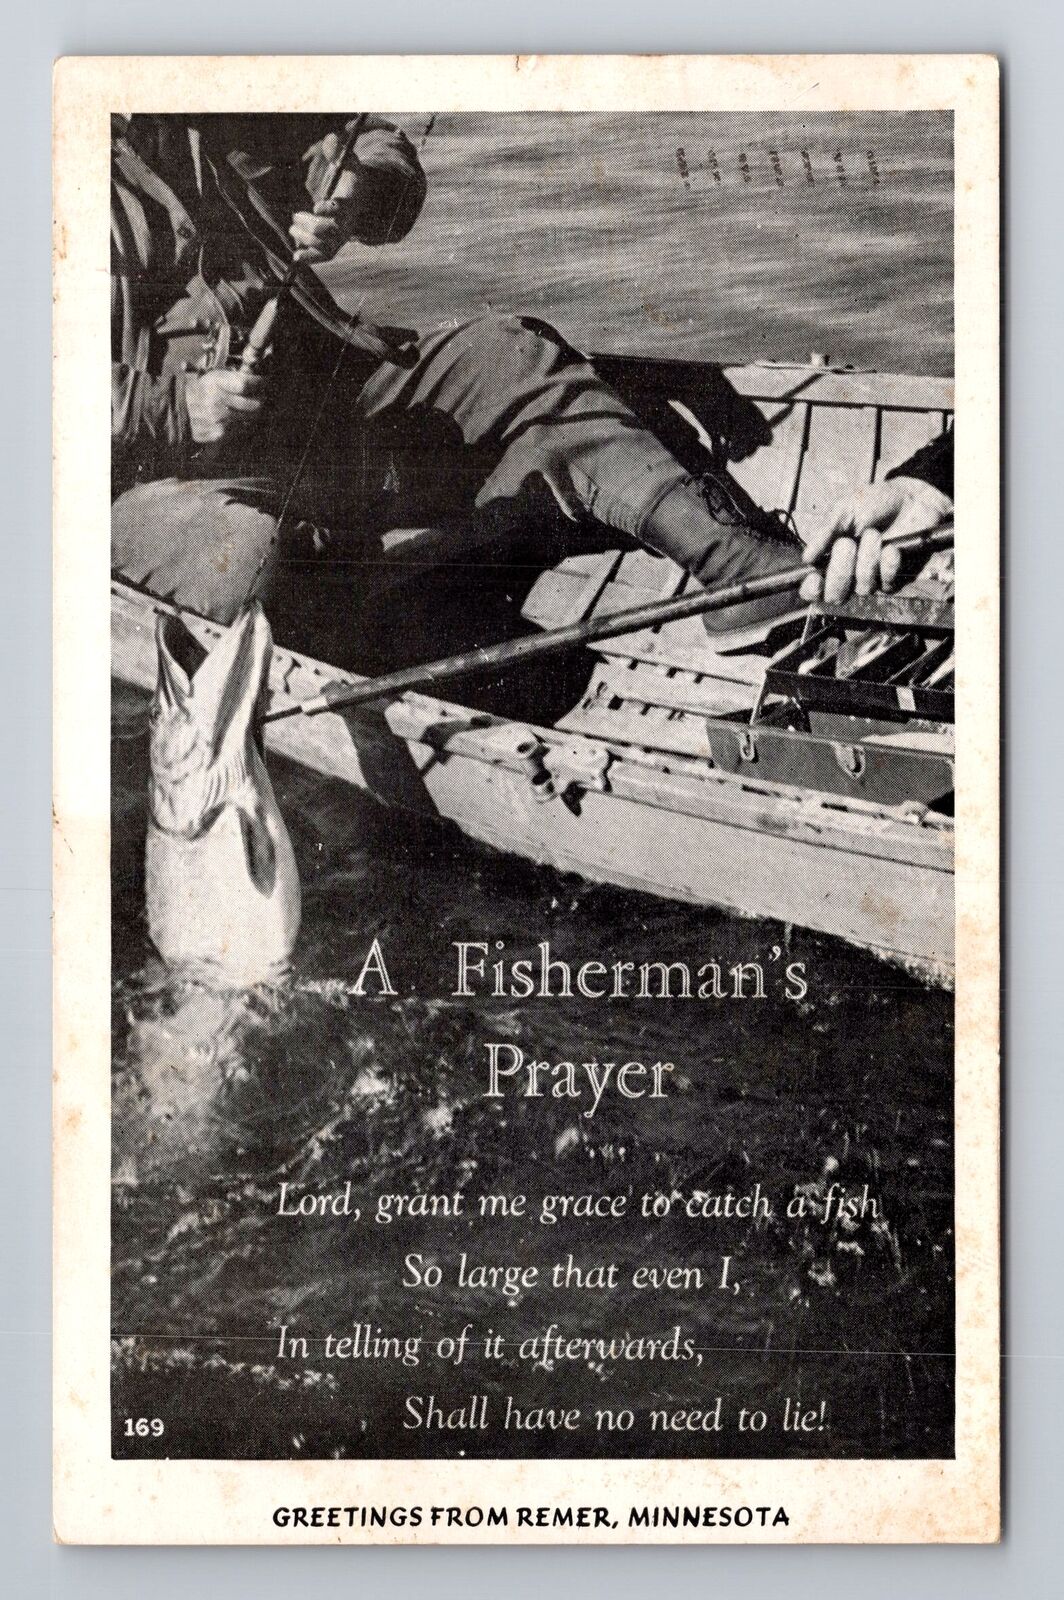 Remer MN-Minnesota, Fishermans Prayer, General Greeting, c1948 Vintage Postcard